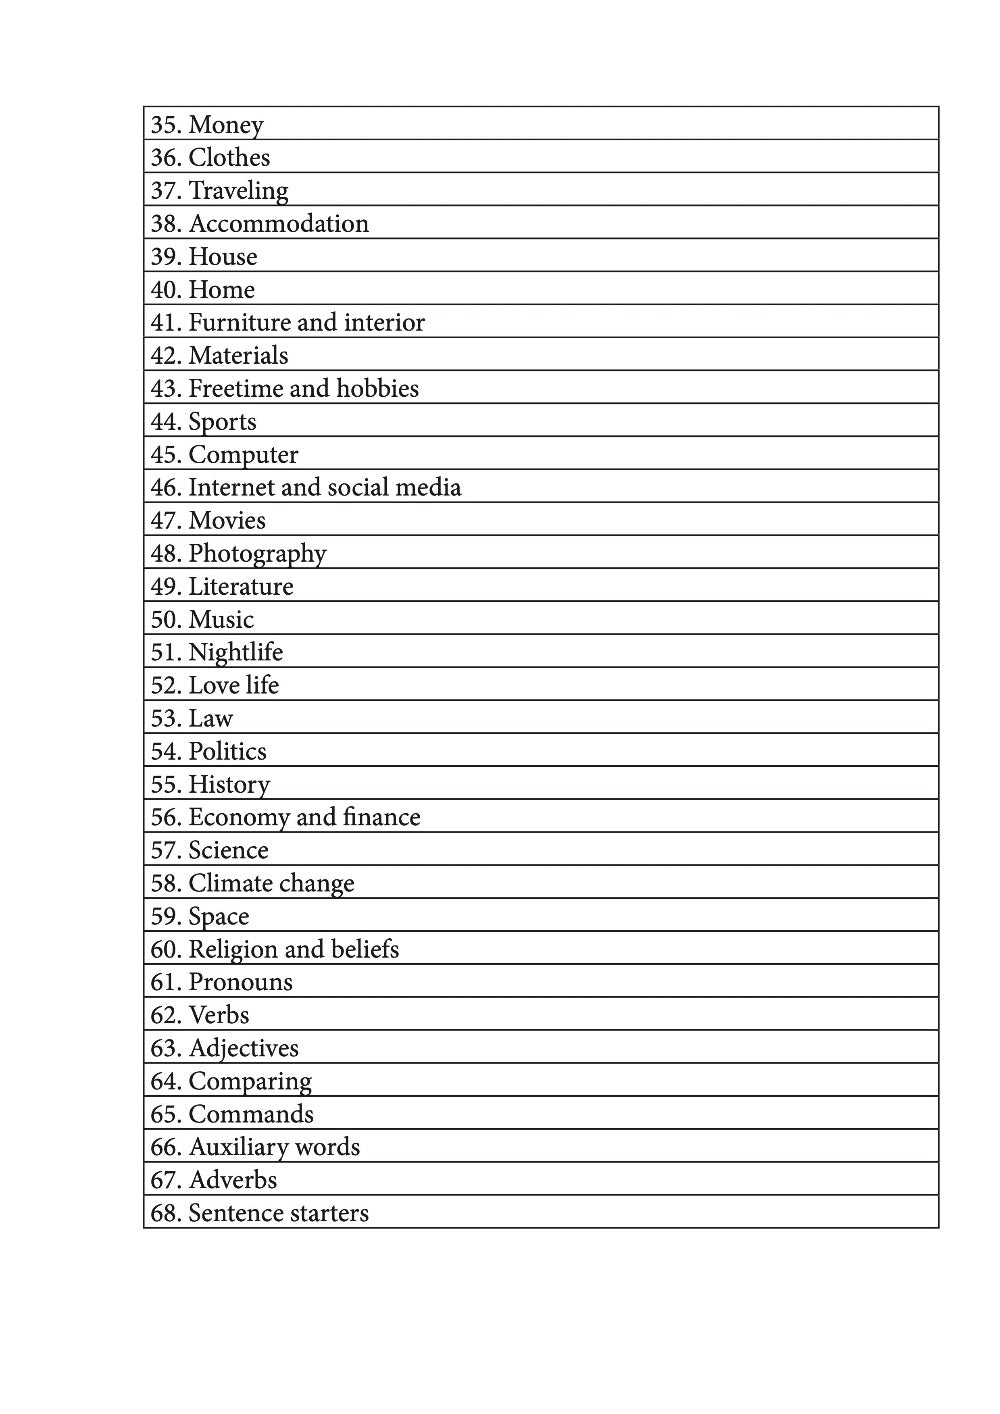 Intha Danu language learning notebook contents page 2